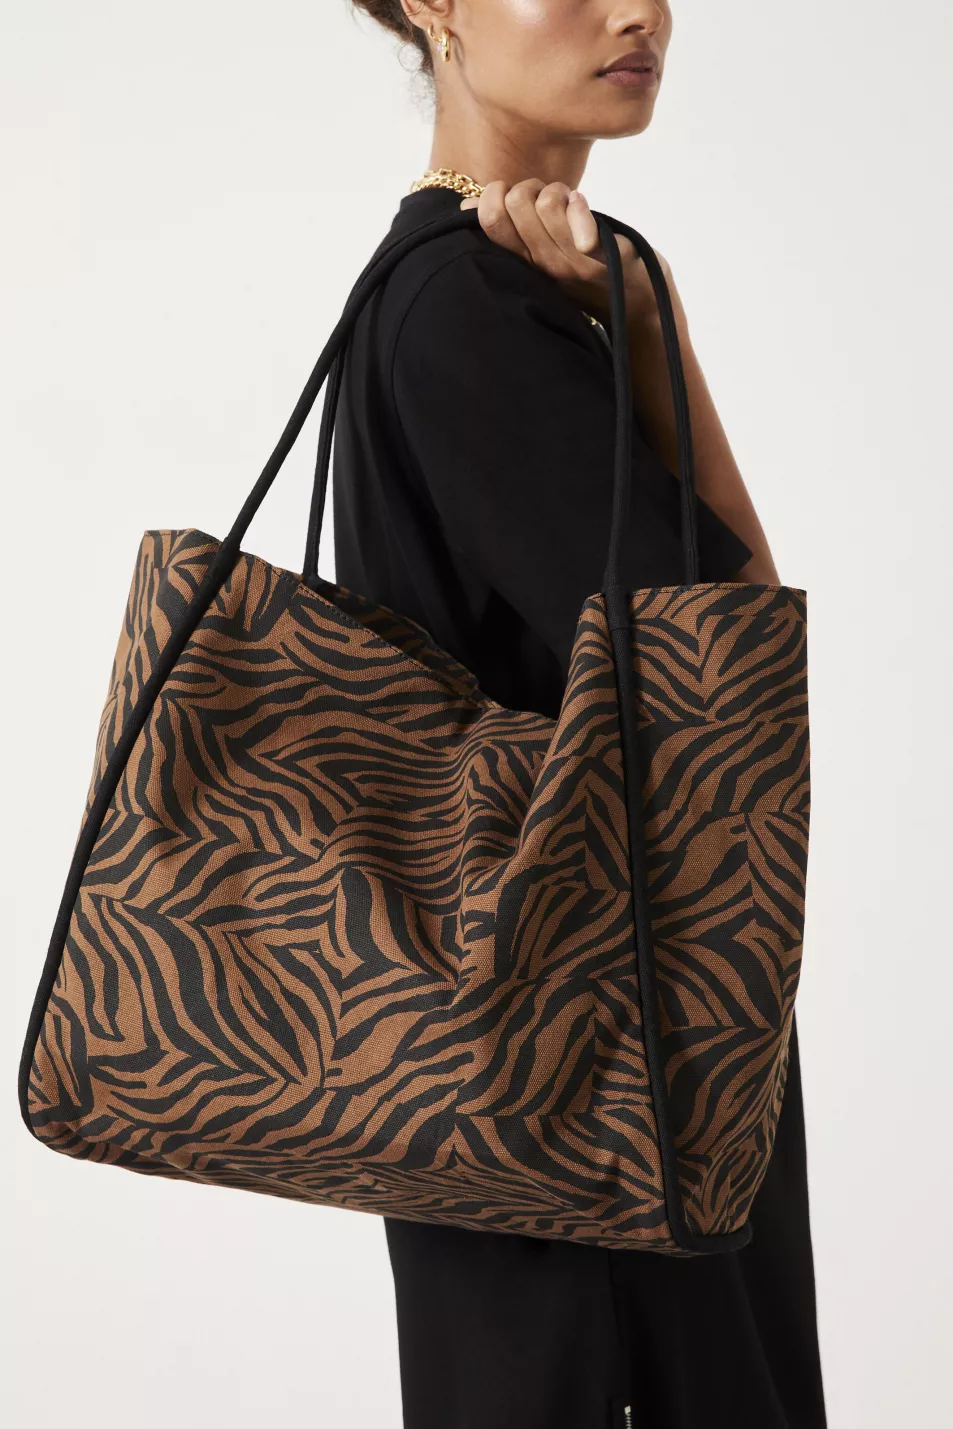 Vero Zebra Print Tote Bag, Hush